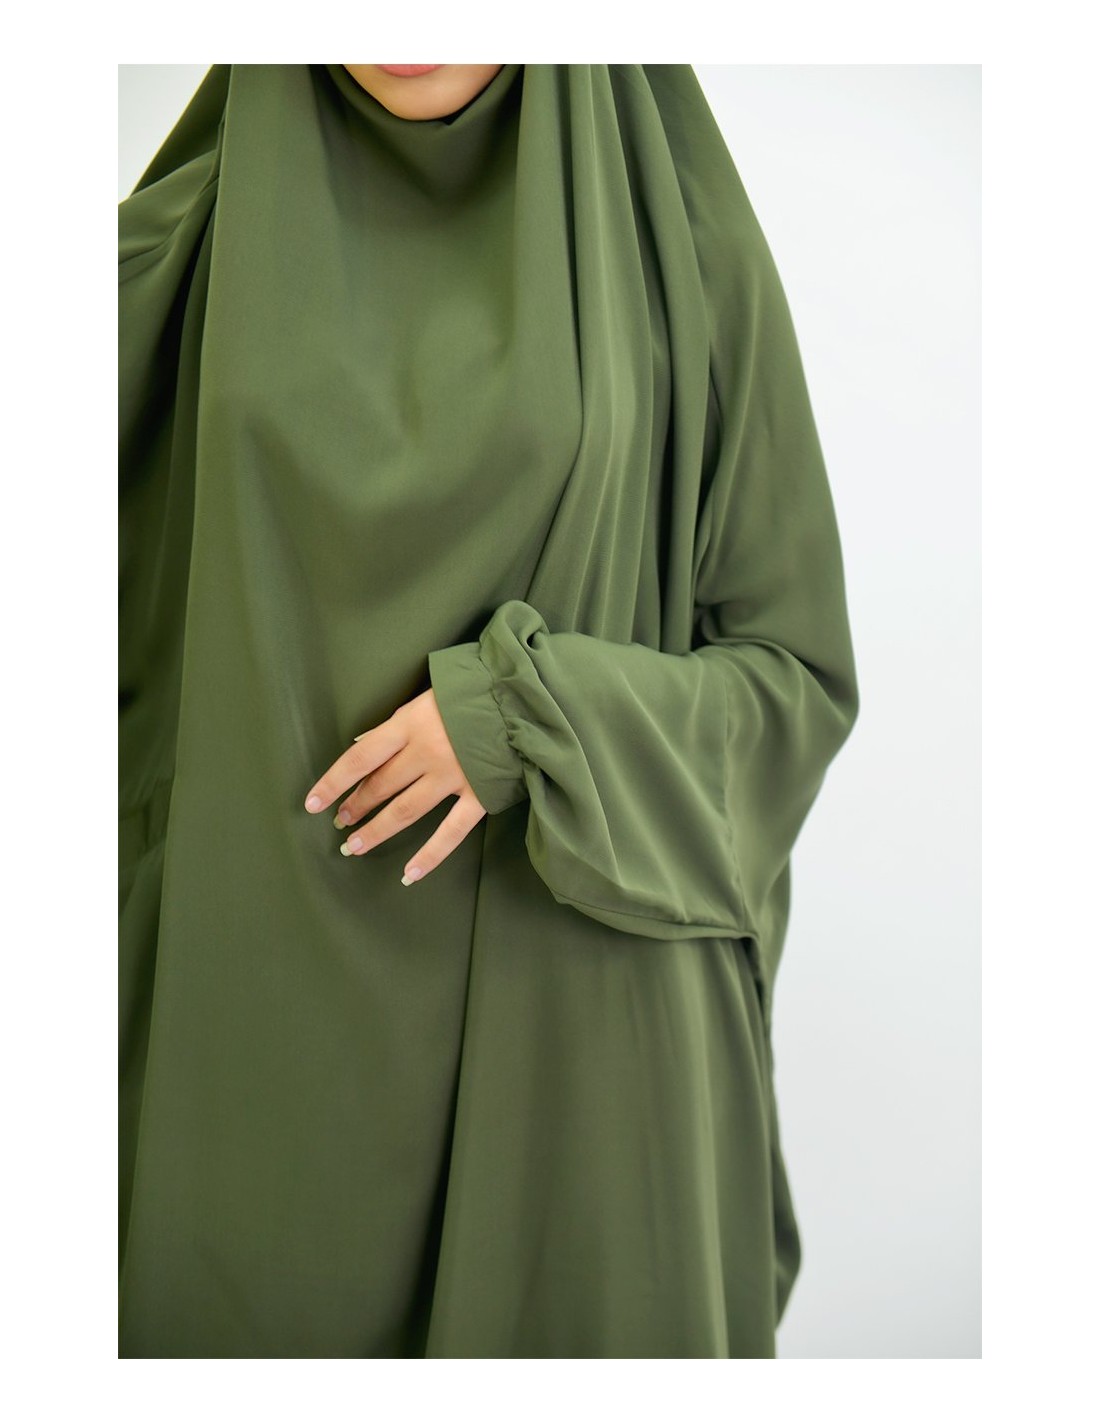 Jilbab houda cocoon with pockets